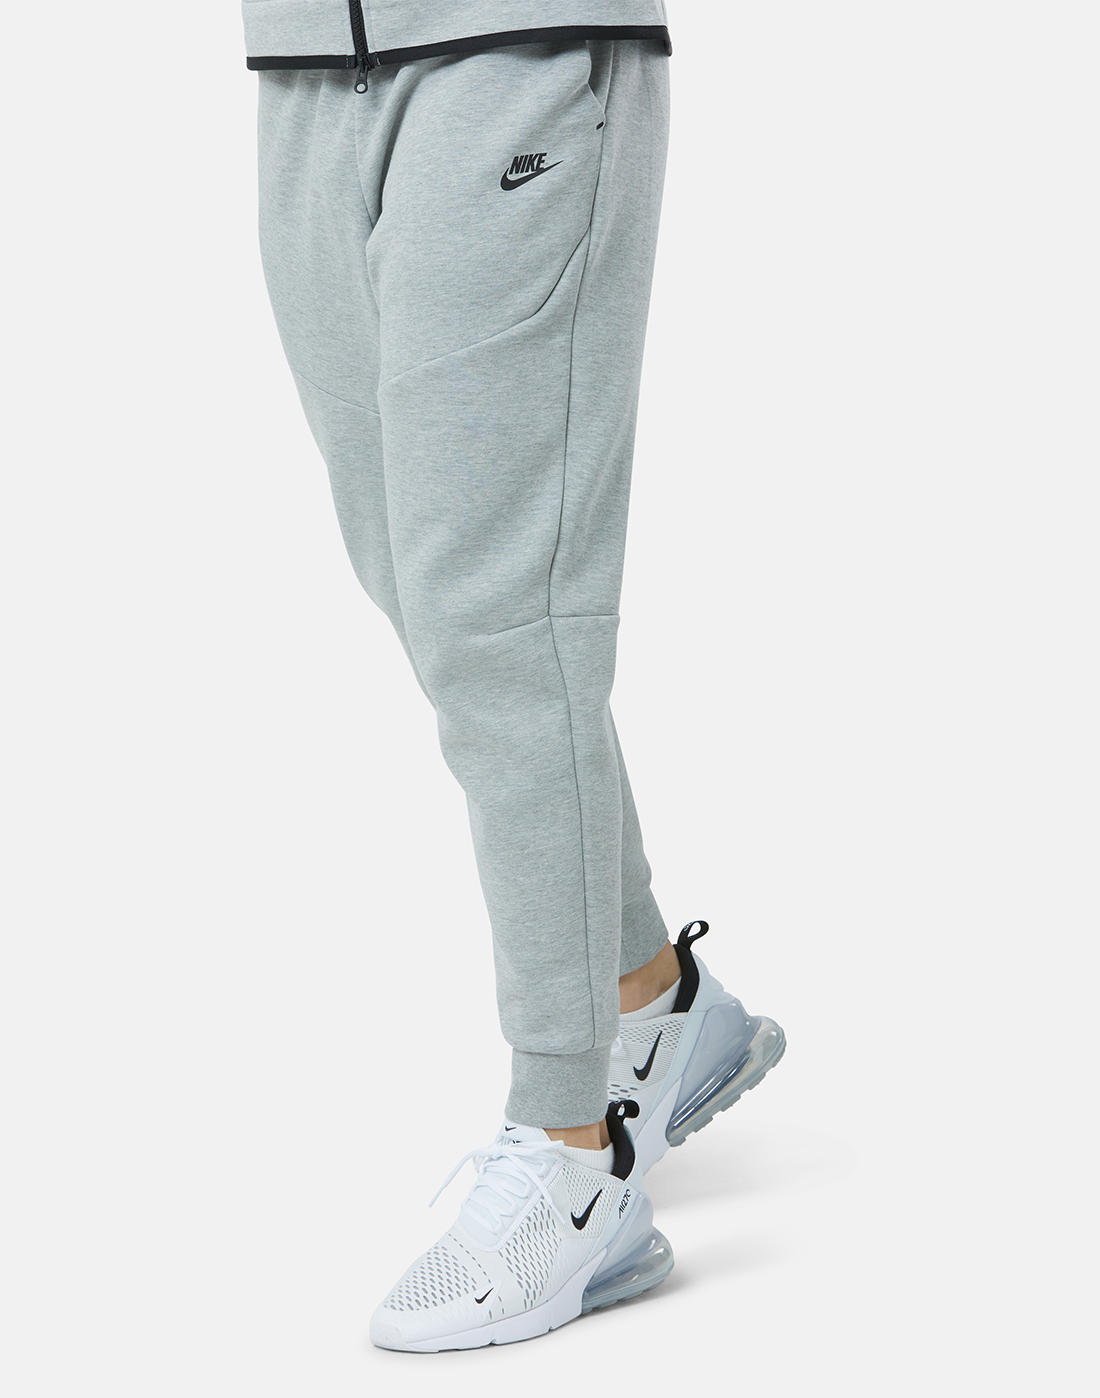 Inquieto completamente muerto Nike Mens Tech Fleece Pants - Grey | Life Style Sports IE